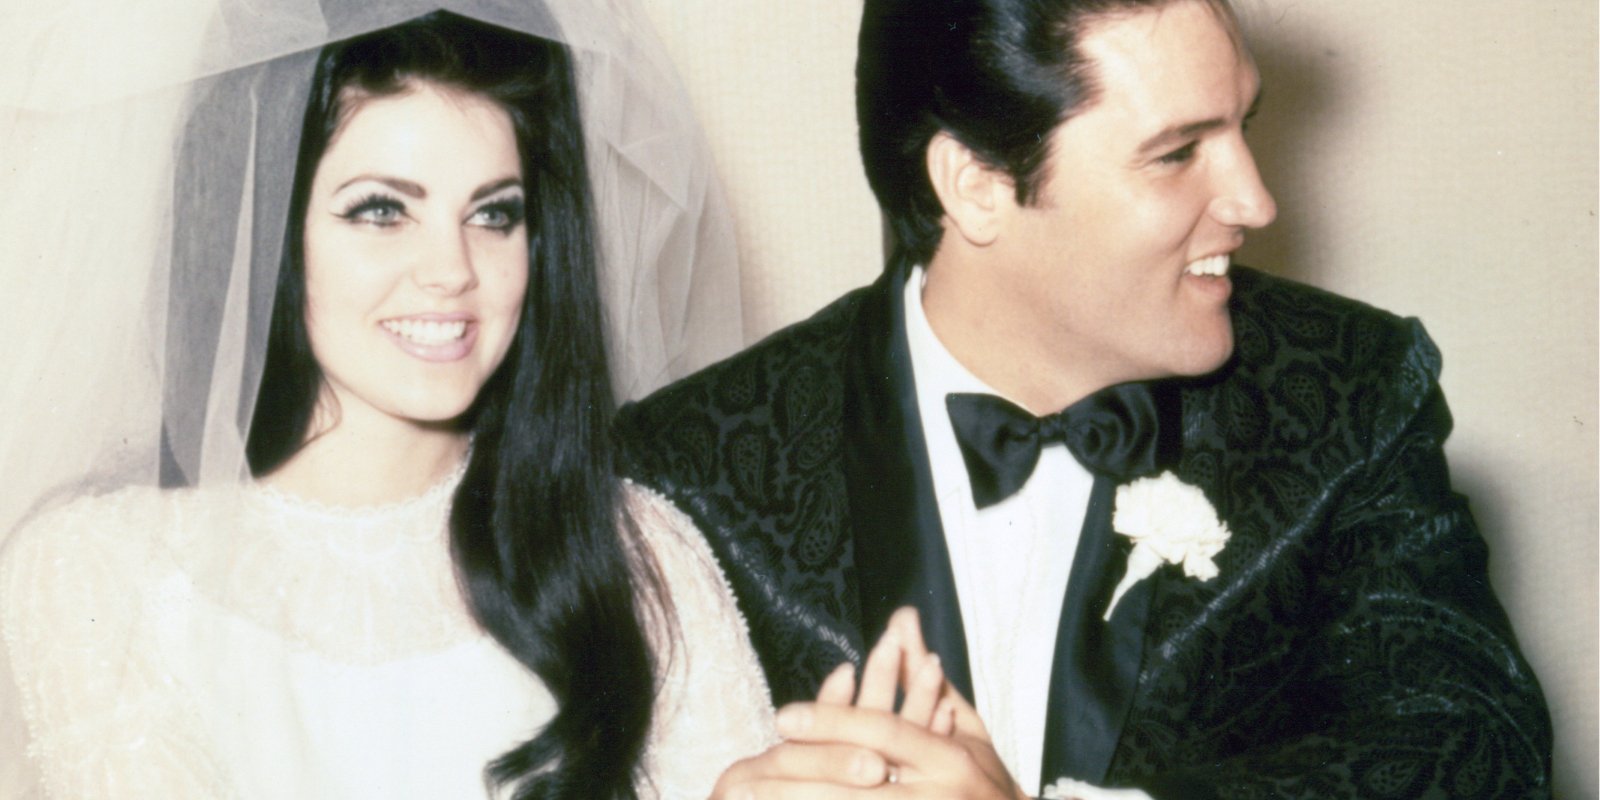 Priscilla and Elvis Presley pose on their wedding day in 1967 in Las Vegas, Nevada.